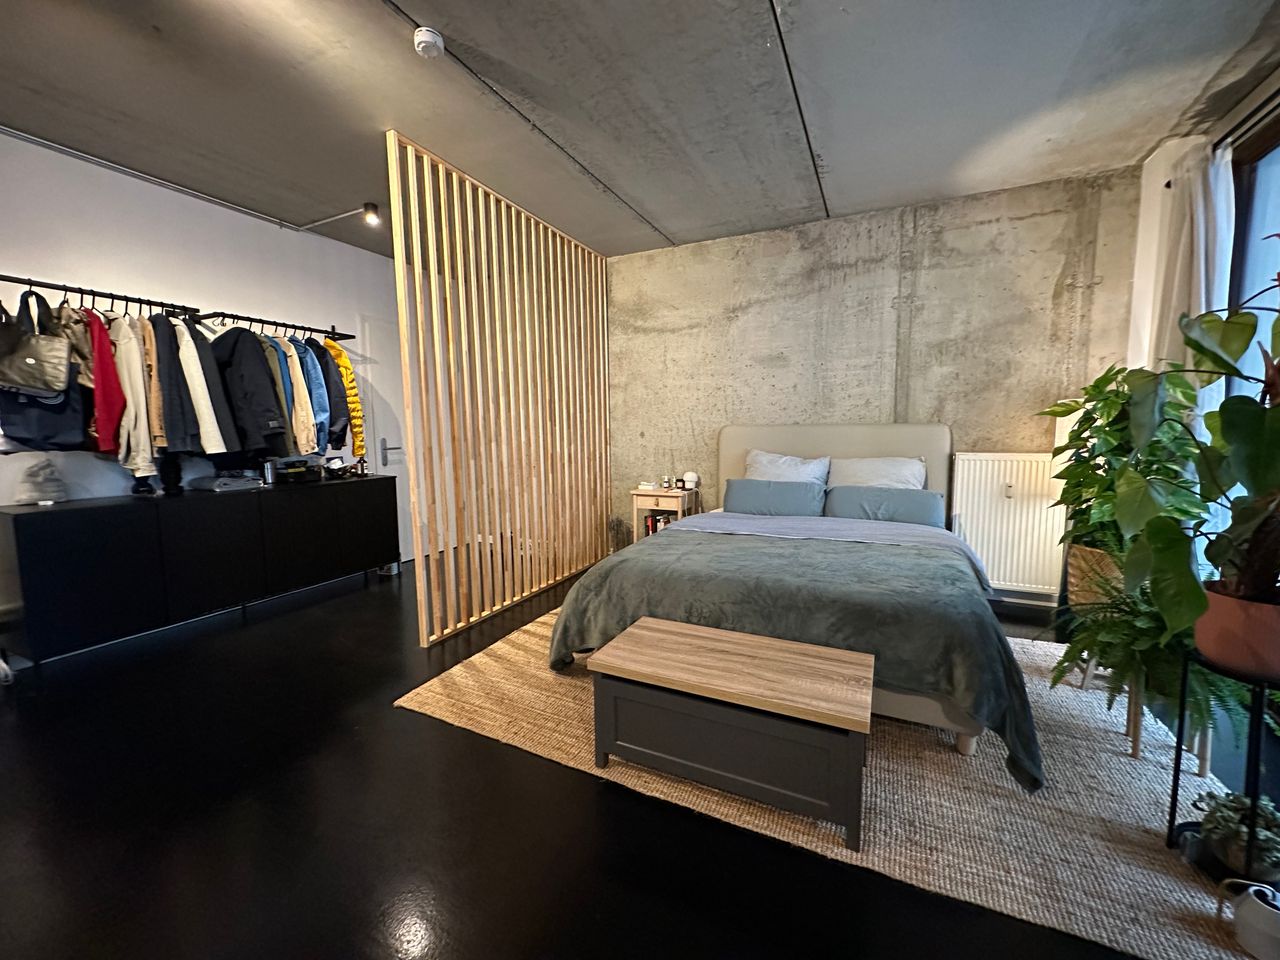 Stylish industrial-style one-room loft in the heart of Berlin Mittein vibrant neighbourhood